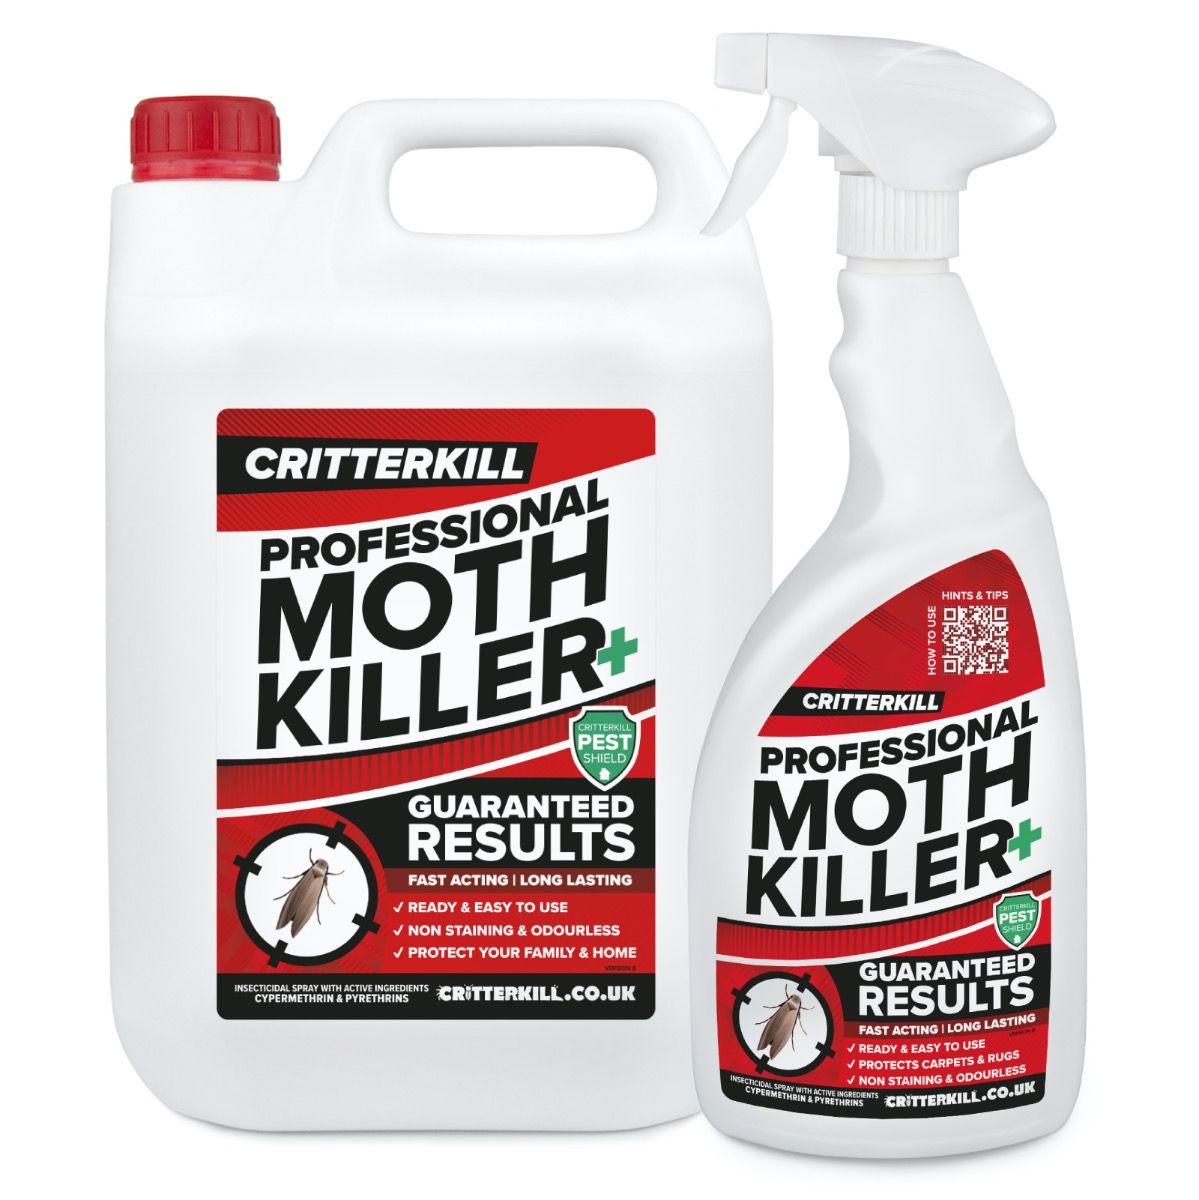 https://critterkill.co.uk/media/catalog/product/cache/62a304575f3acfdb7bacfa8c9ec00a11/c/r/critterkill-5l-1l-insecticide-spray-moth-12.jpg